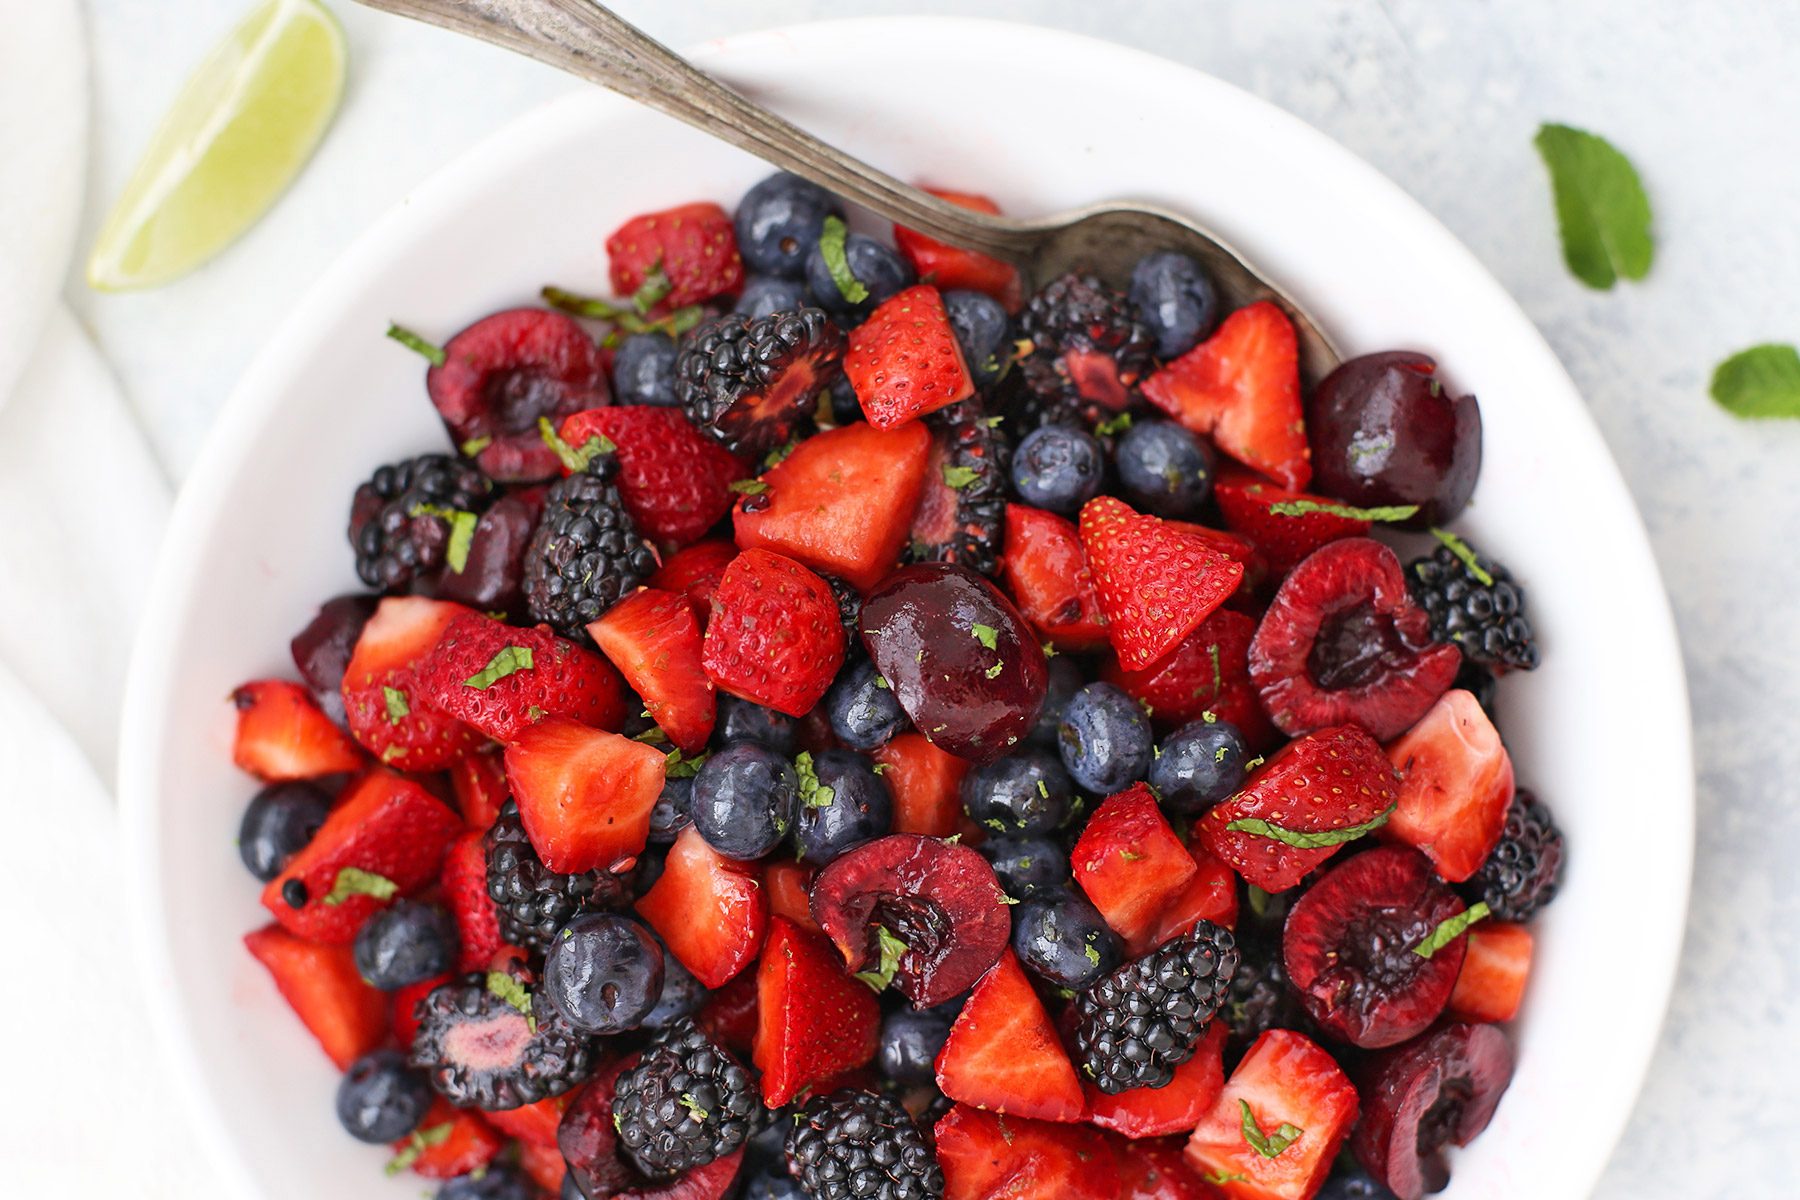 Mixed Berry Fruit Salad Recipe Details